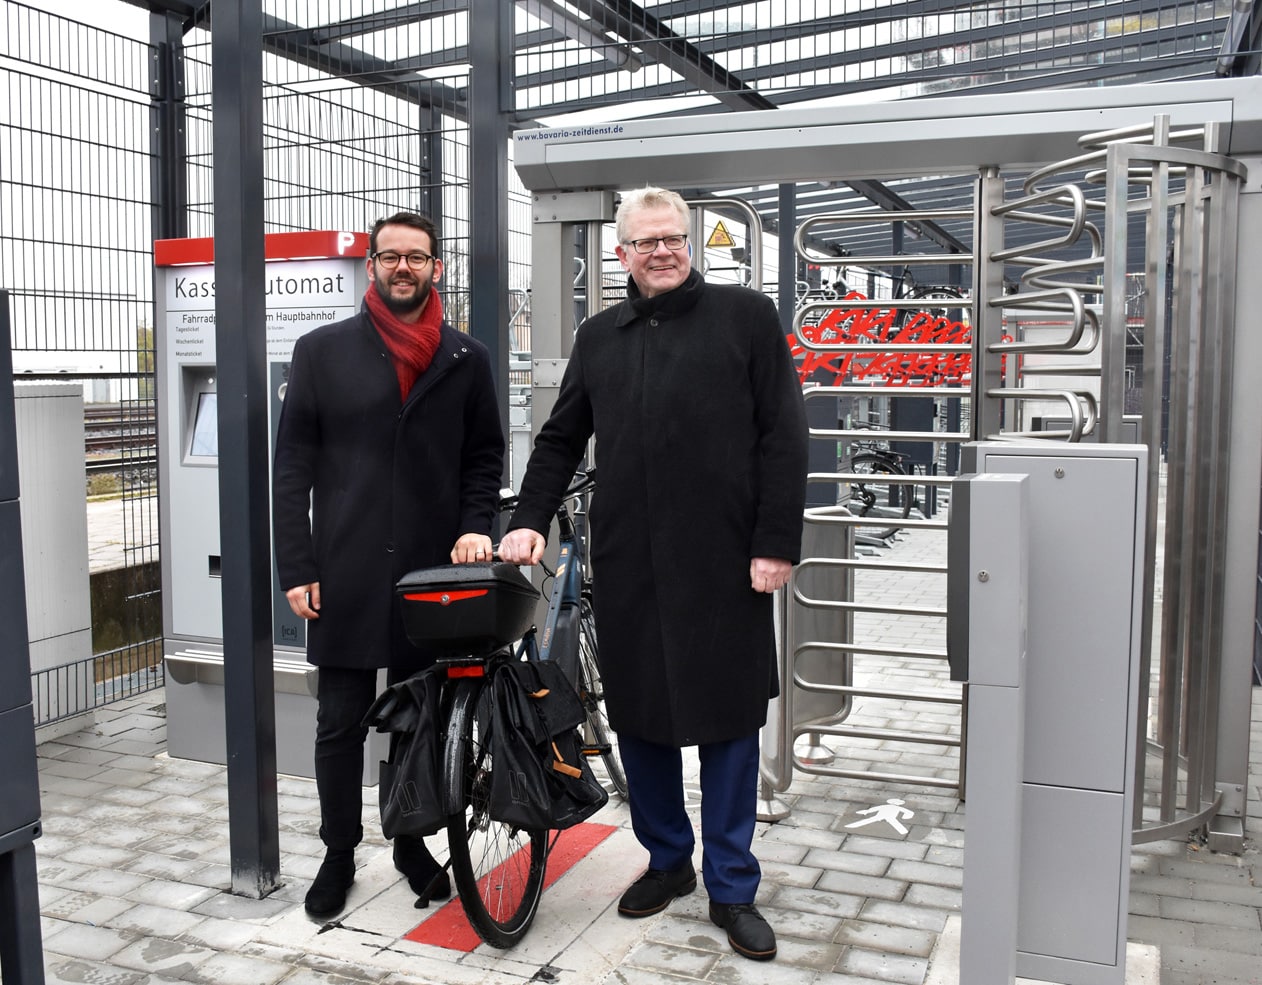 OB Ebersberger und Bürgermeister Zippel mit Fahrrad vor dem neuen Fahrrad-Parkhaus.